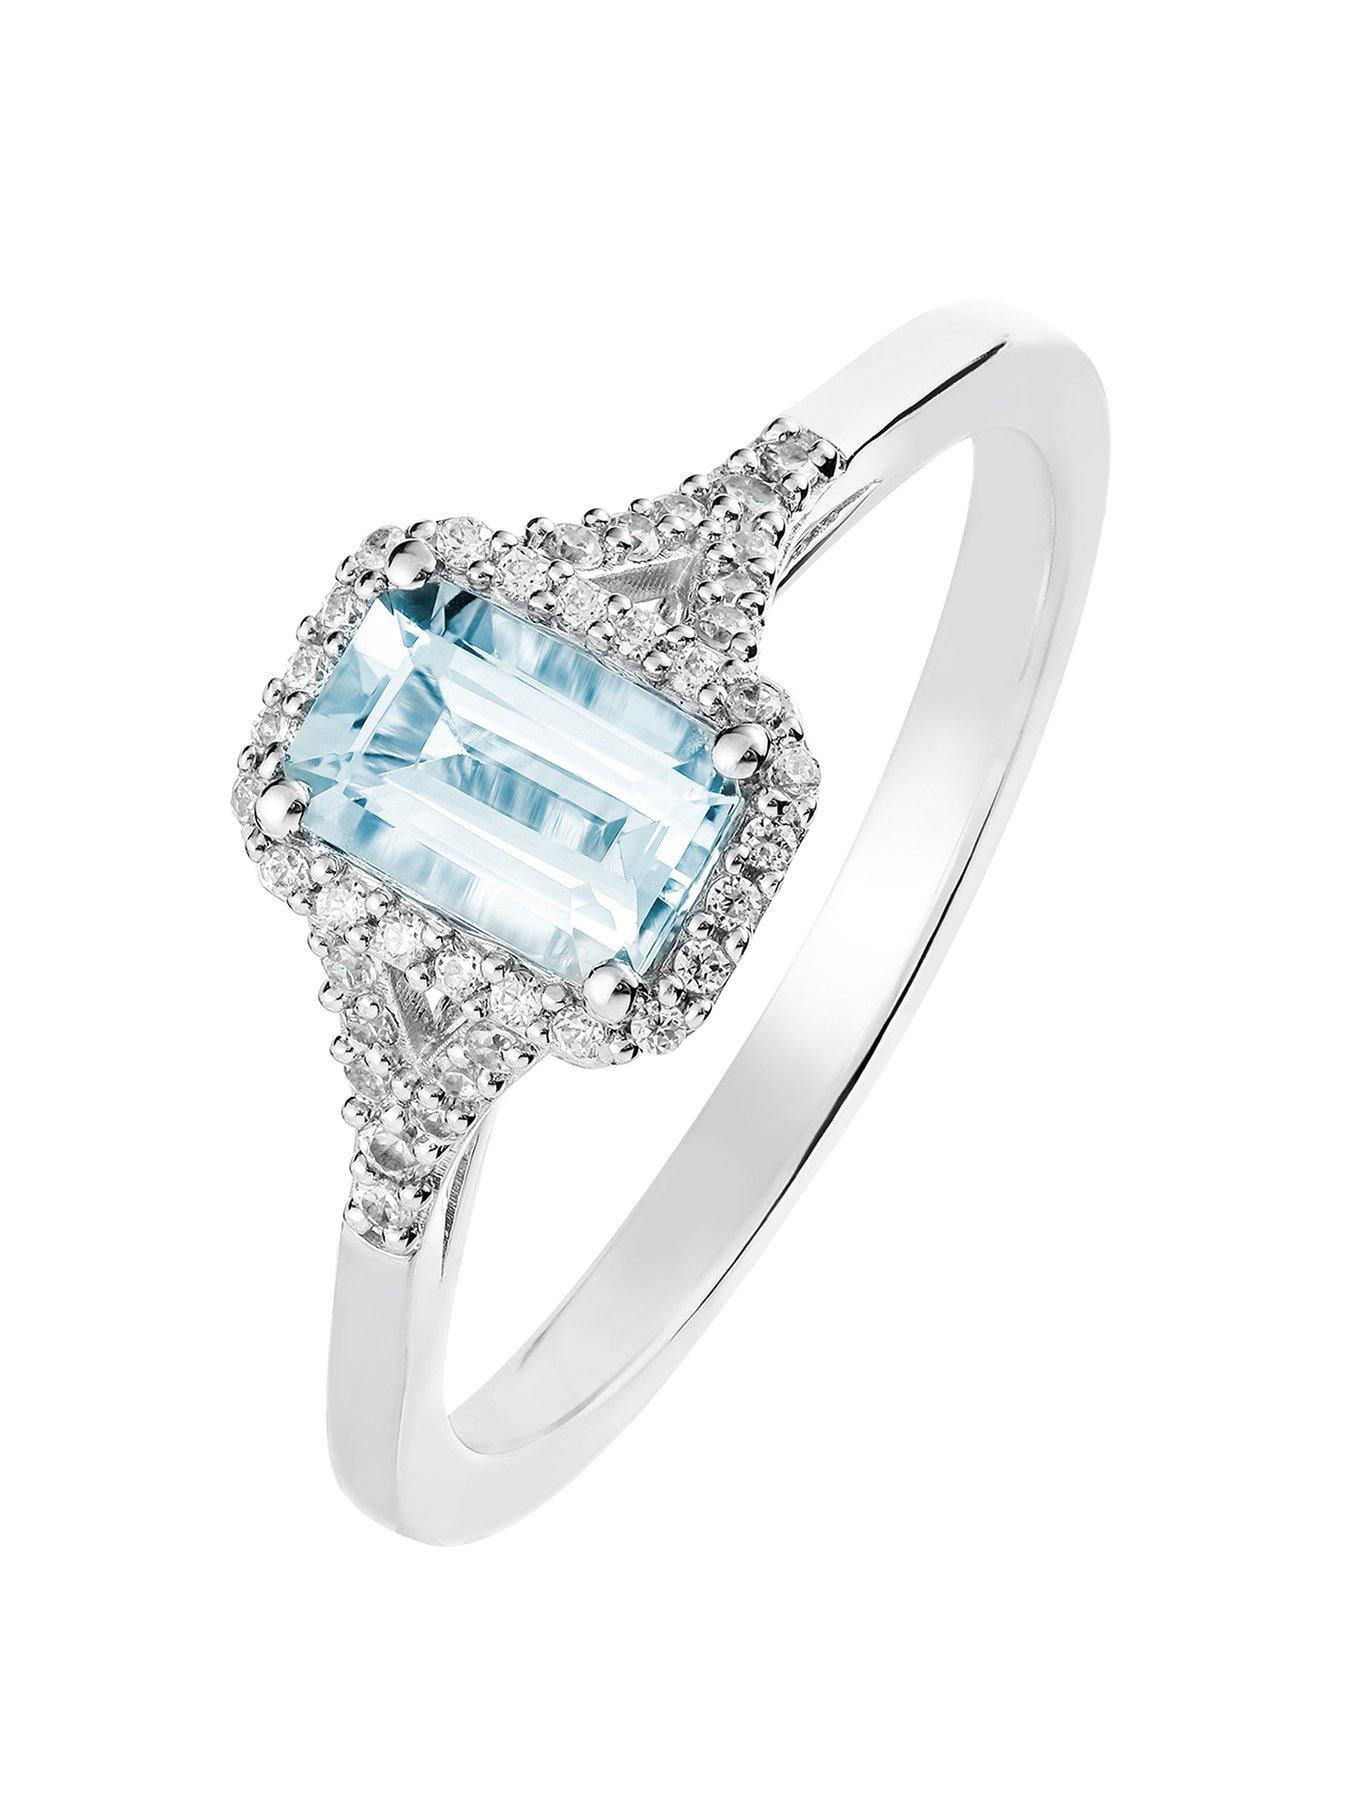 Details about   0.25Ct Round Cut Diamond V Shape Chevron Wedding Band Ring 14K White Gold Finish 